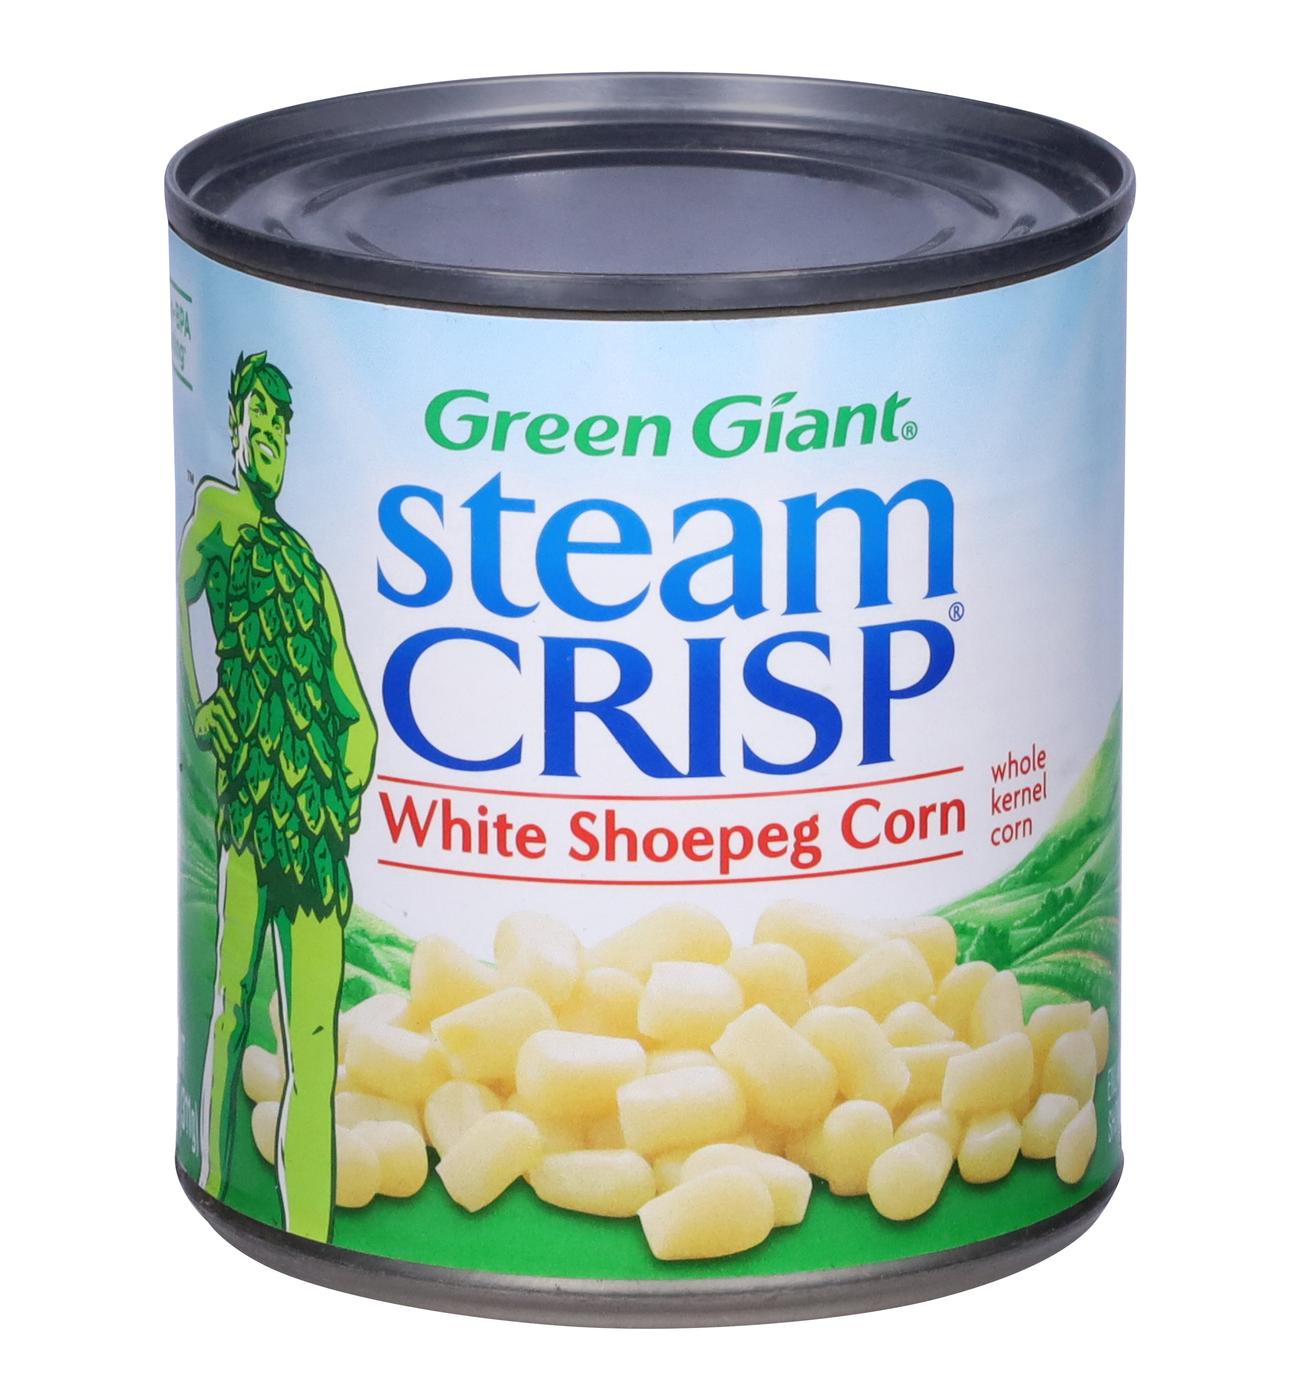 Green Giant Steam Crisp White Shoepeg Whole Kernel Corn; image 1 of 3